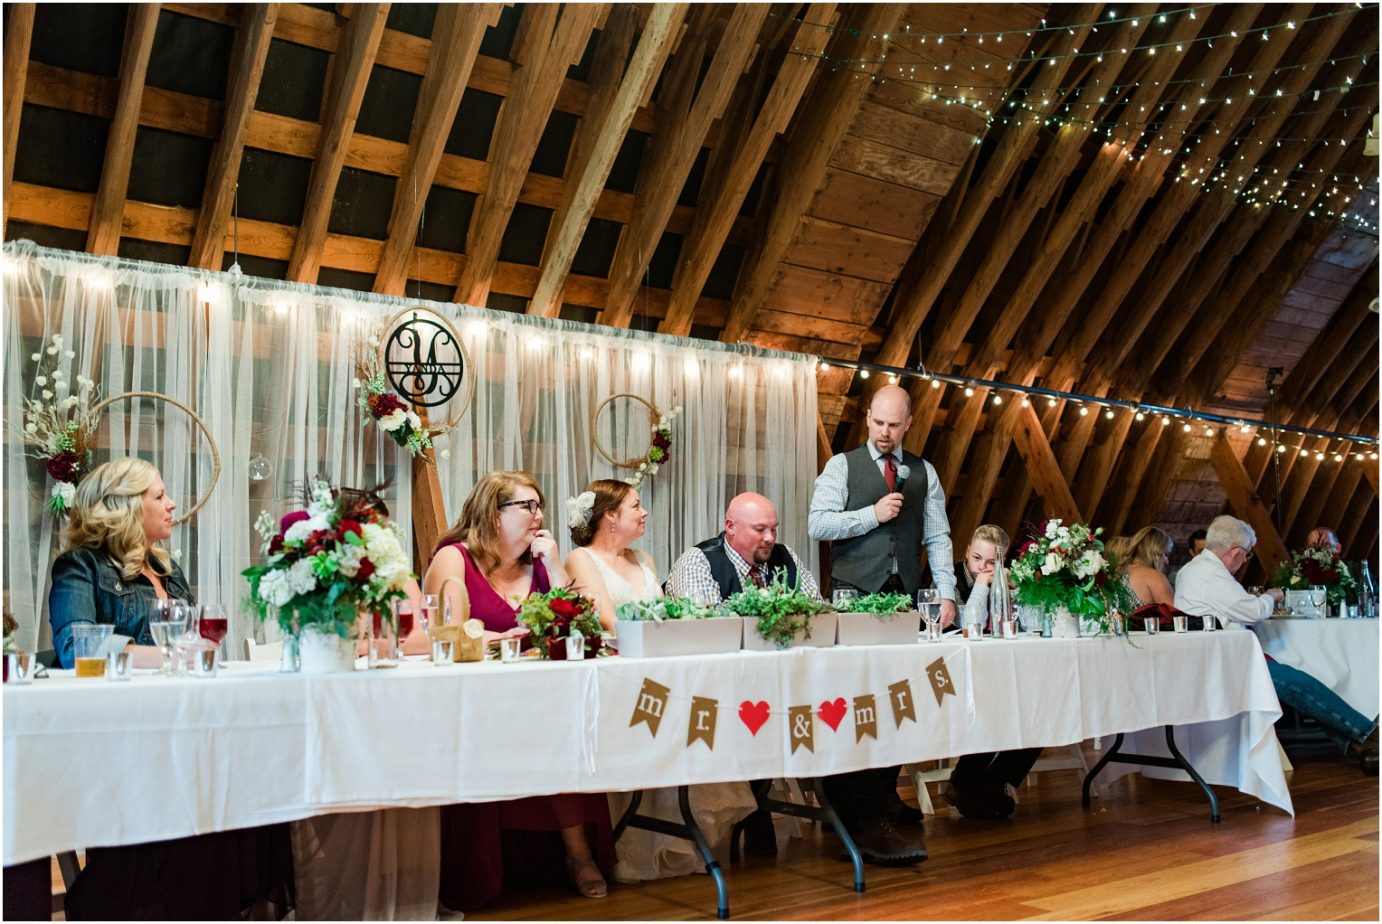 Pine River Ranch Wedding Reception Photo